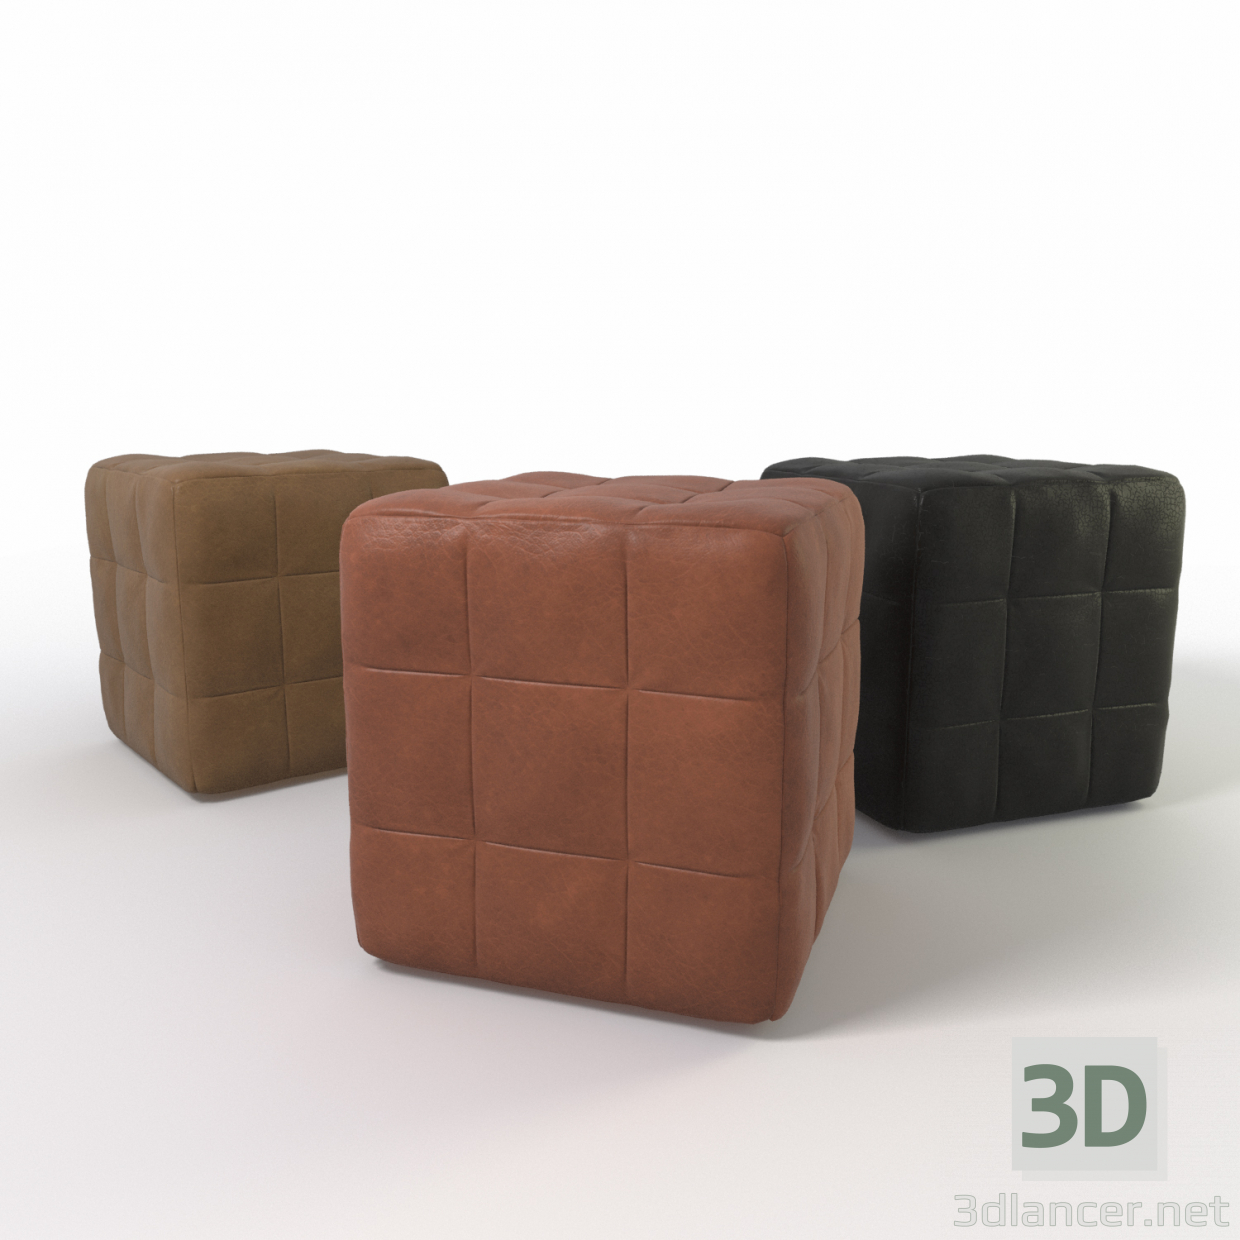 "Loto" otomano 3D modelo Compro - render